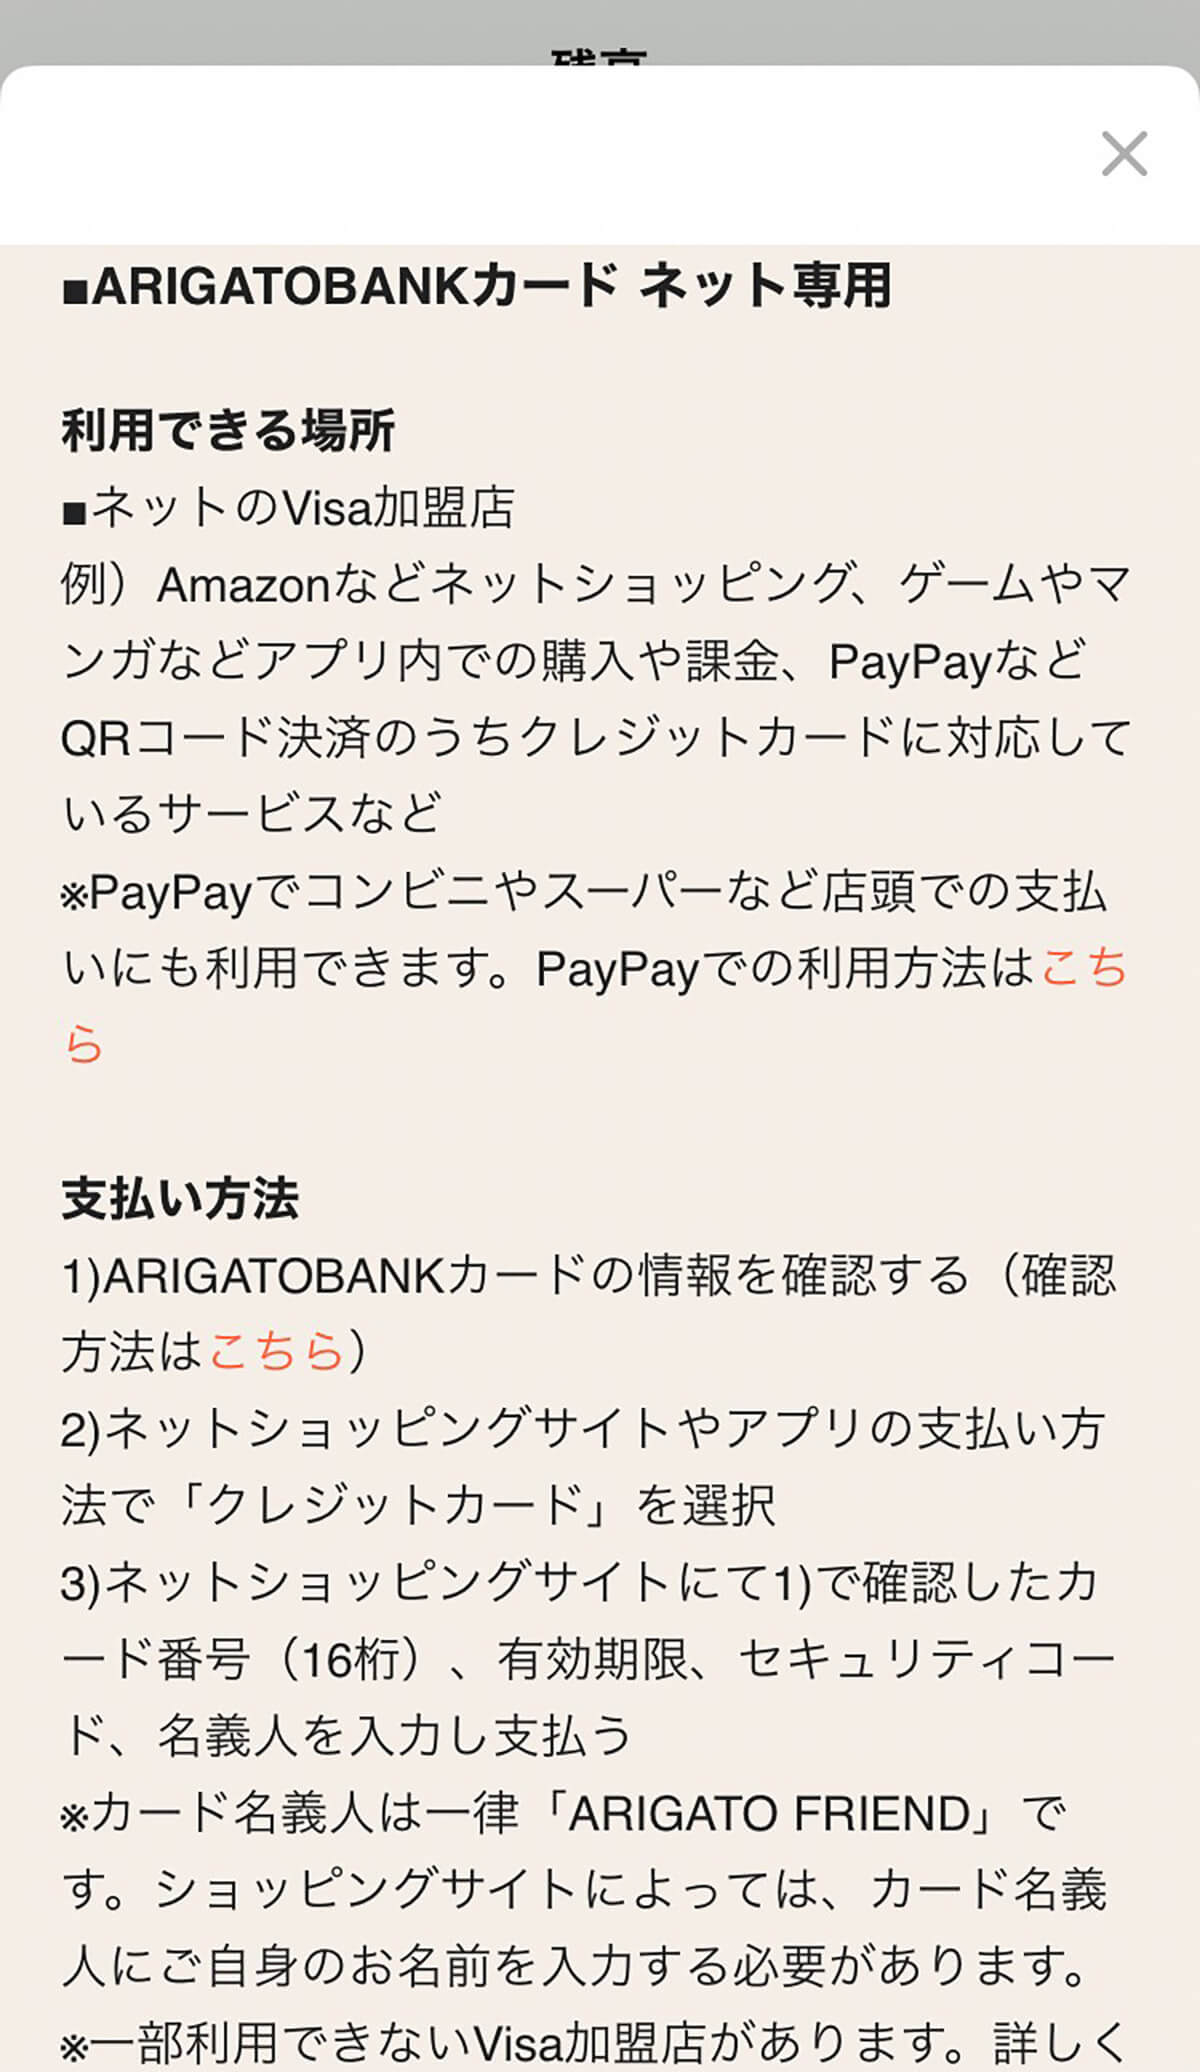 「ARIGATOBANKカード ネット専用」でPayPay利用01